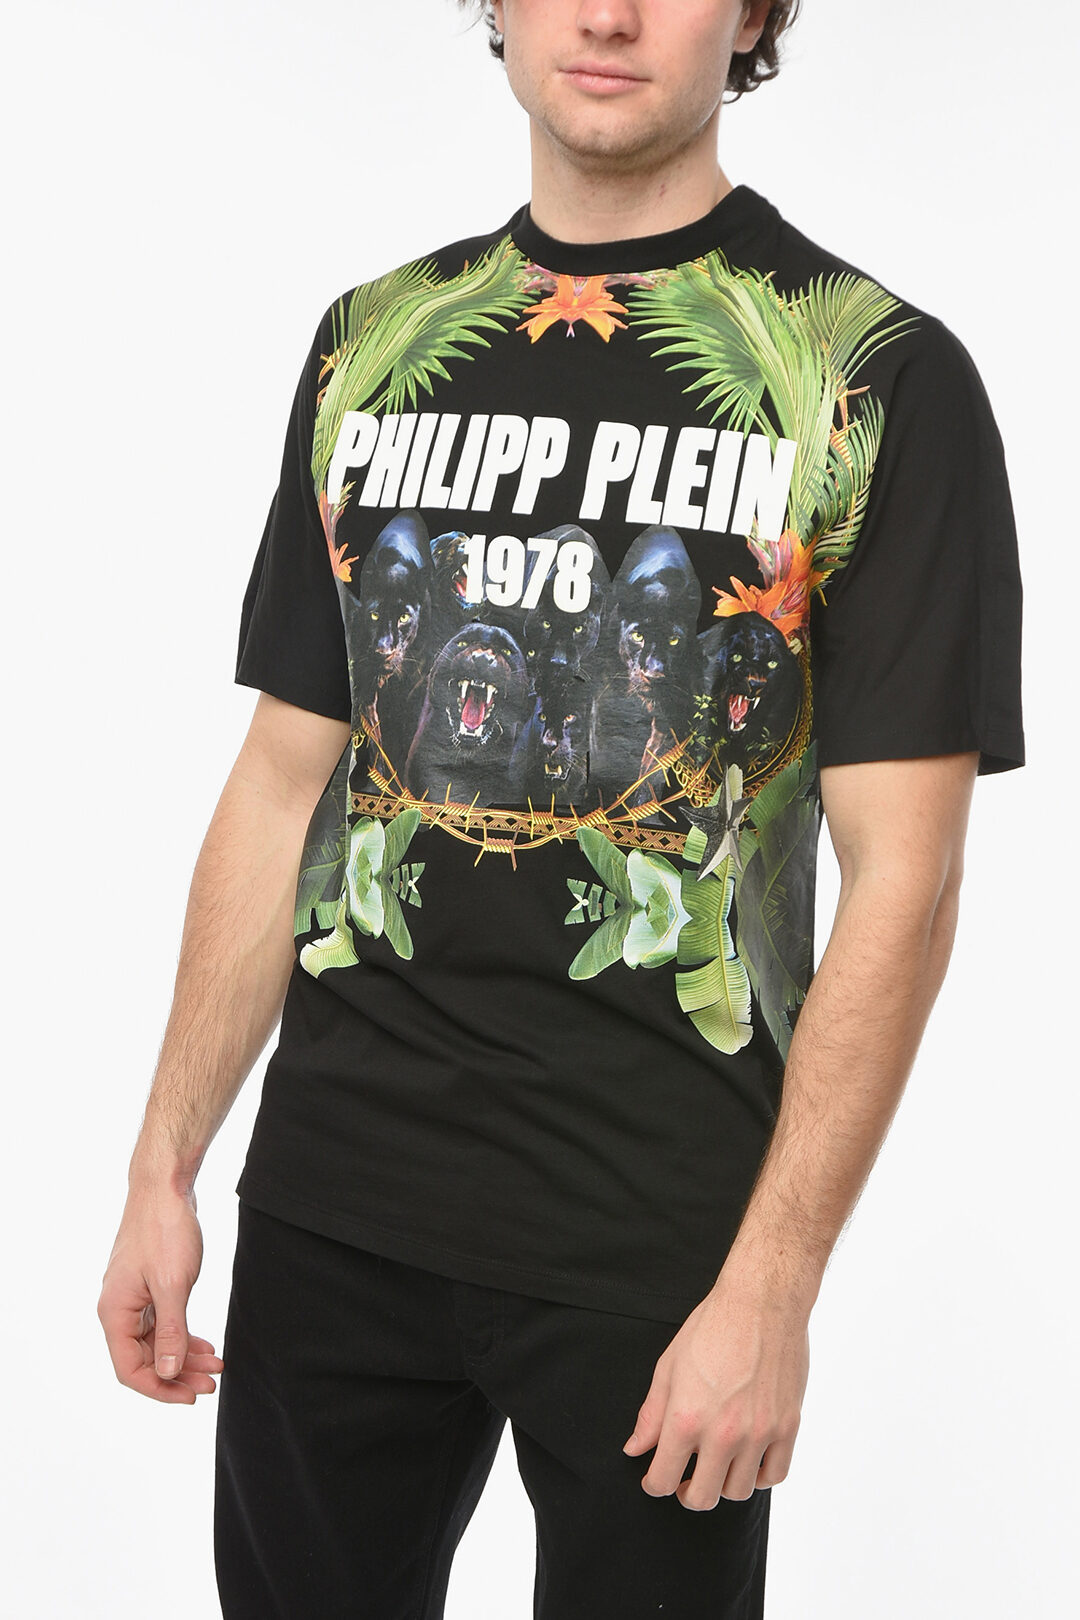 ik heb nodig Site lijn Reiziger Philipp Plein HOMME EST.1978 LIMITED EDITION Crew-neck T-shirt with  Contrasting Lettering men - Glamood Outlet